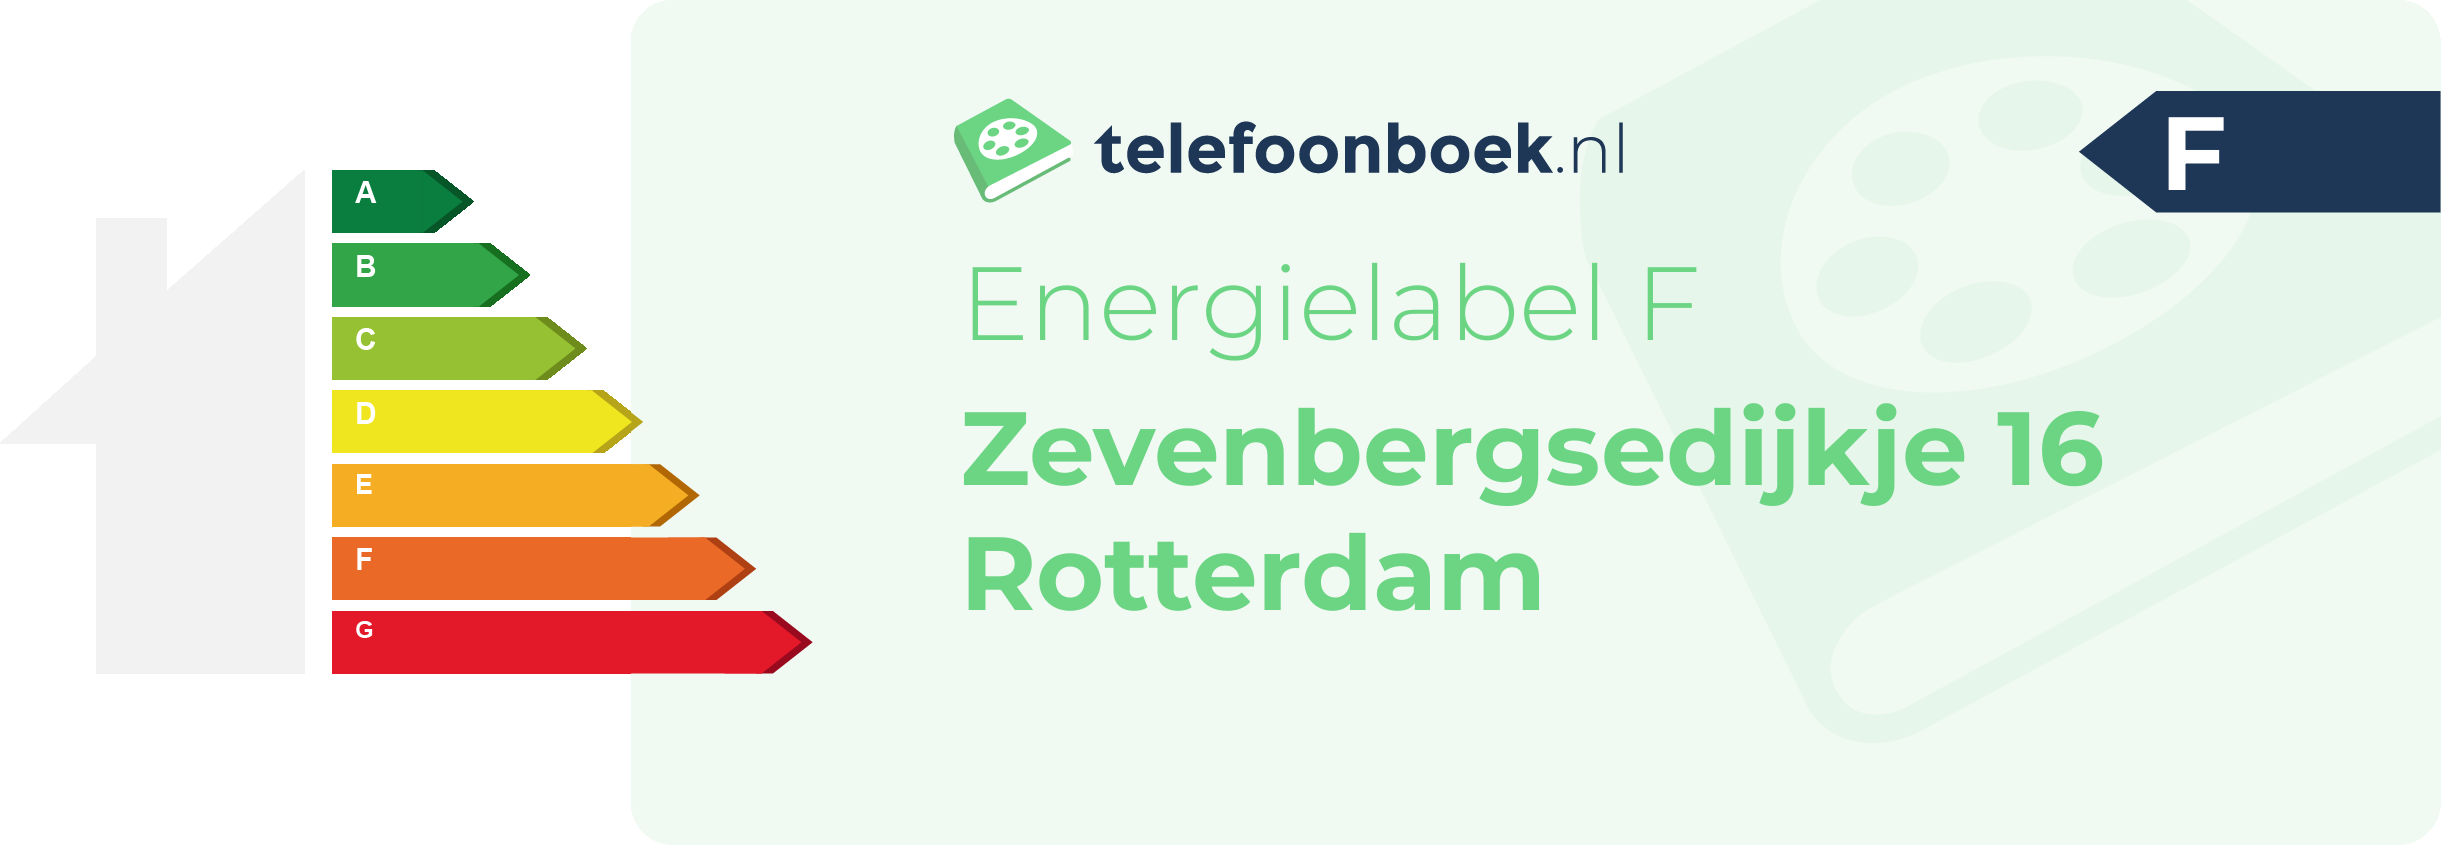 Energielabel Zevenbergsedijkje 16 Rotterdam